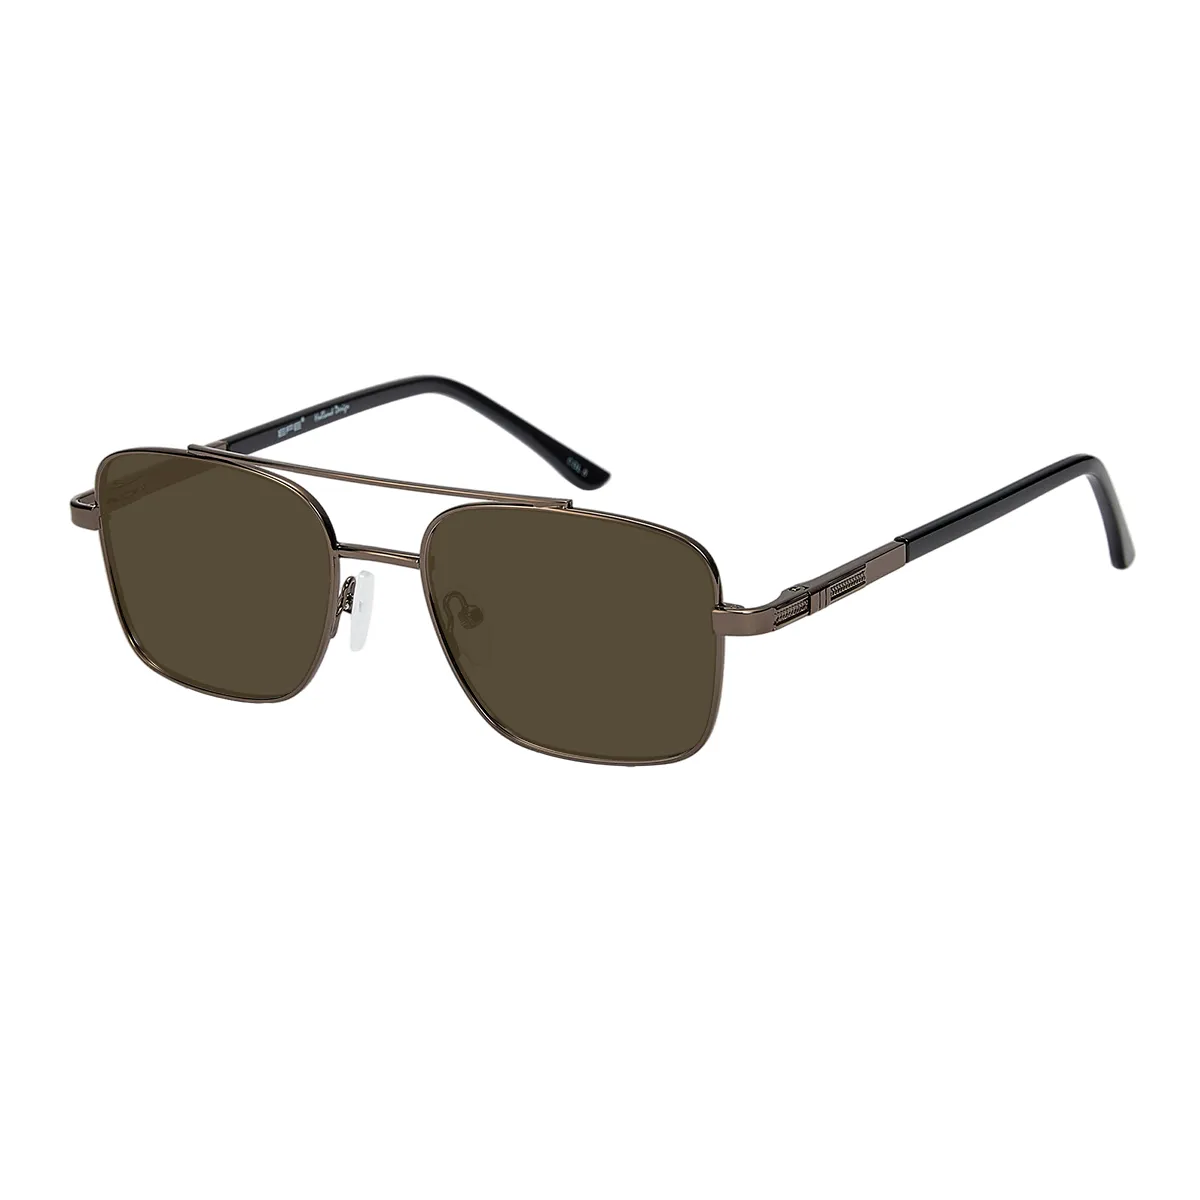 Elisha - Square Brown Sunglasses for Men